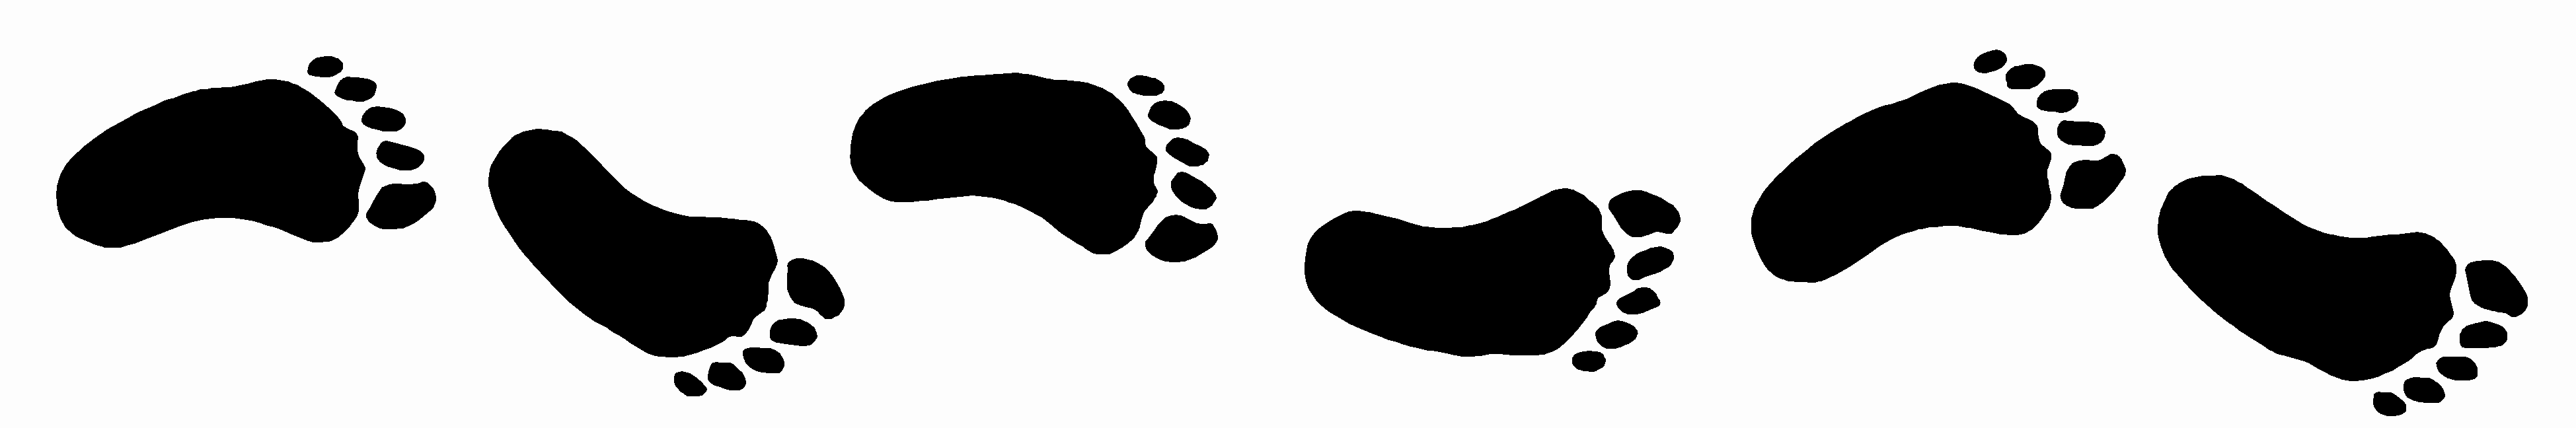 Free Walking Footprints Cliparts, Download Free Walking Footprints